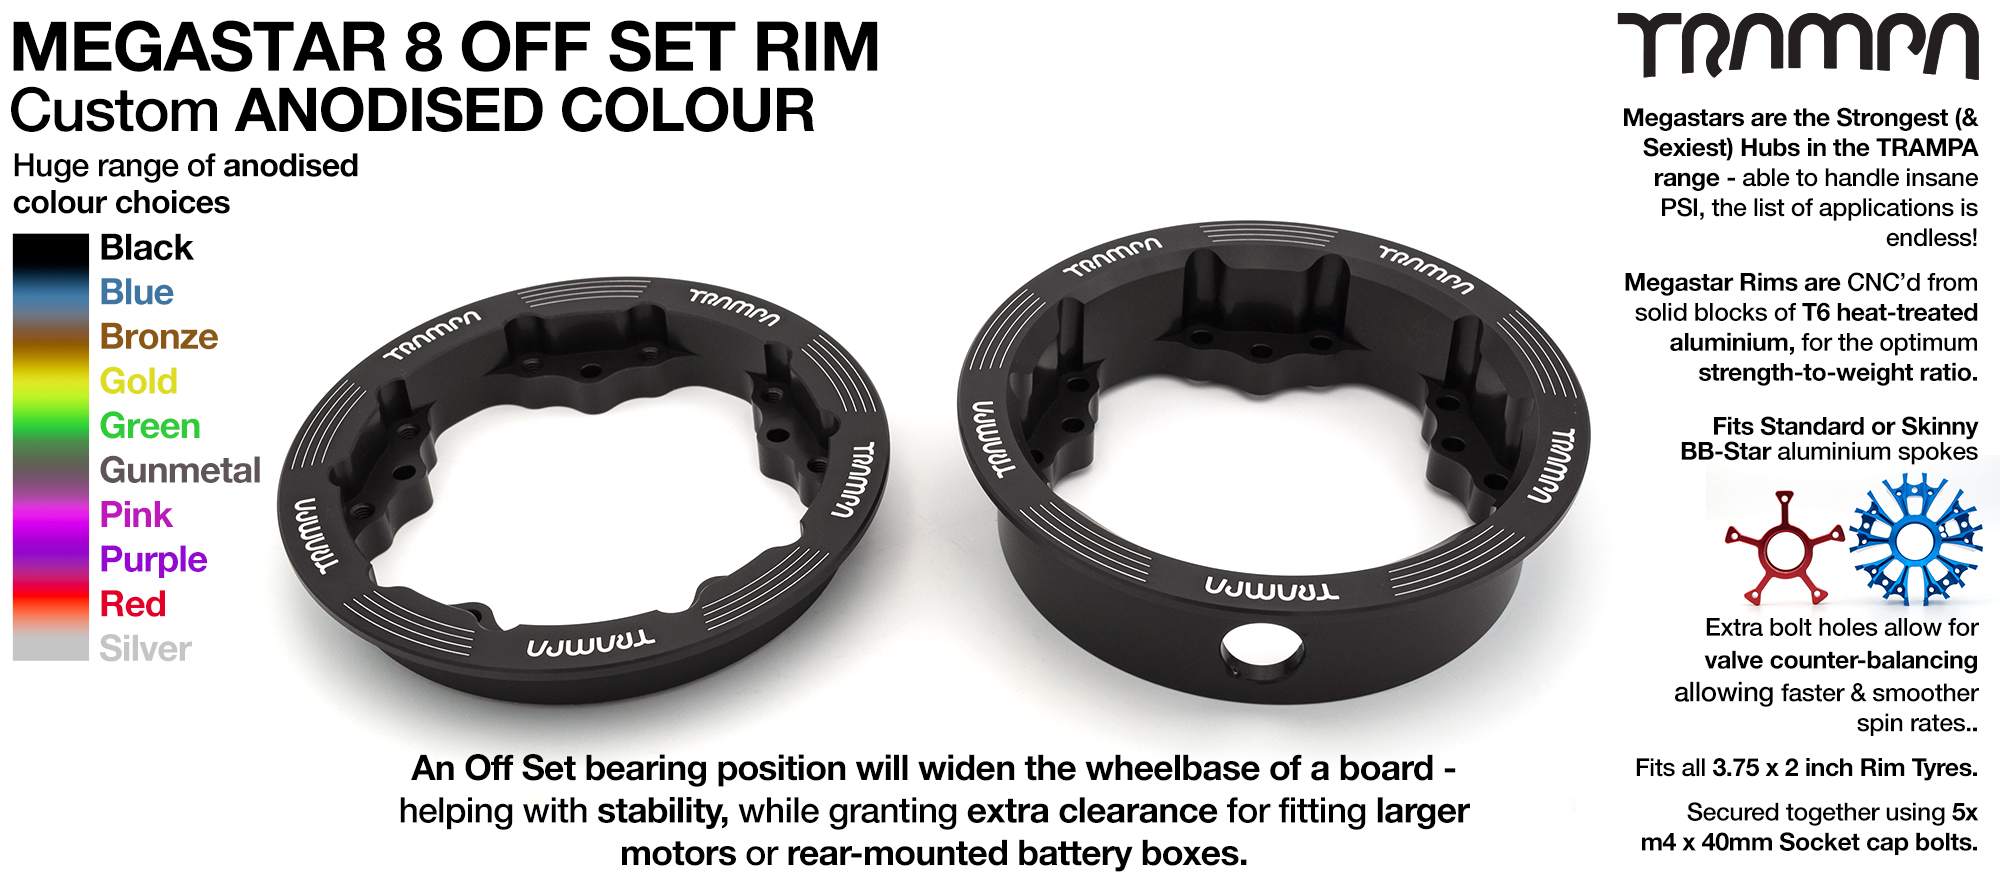 MEGASTAR 8 Off-Set Rims Measure 3.75 x 2 Inch & accept all 3.75 Rim Tyres